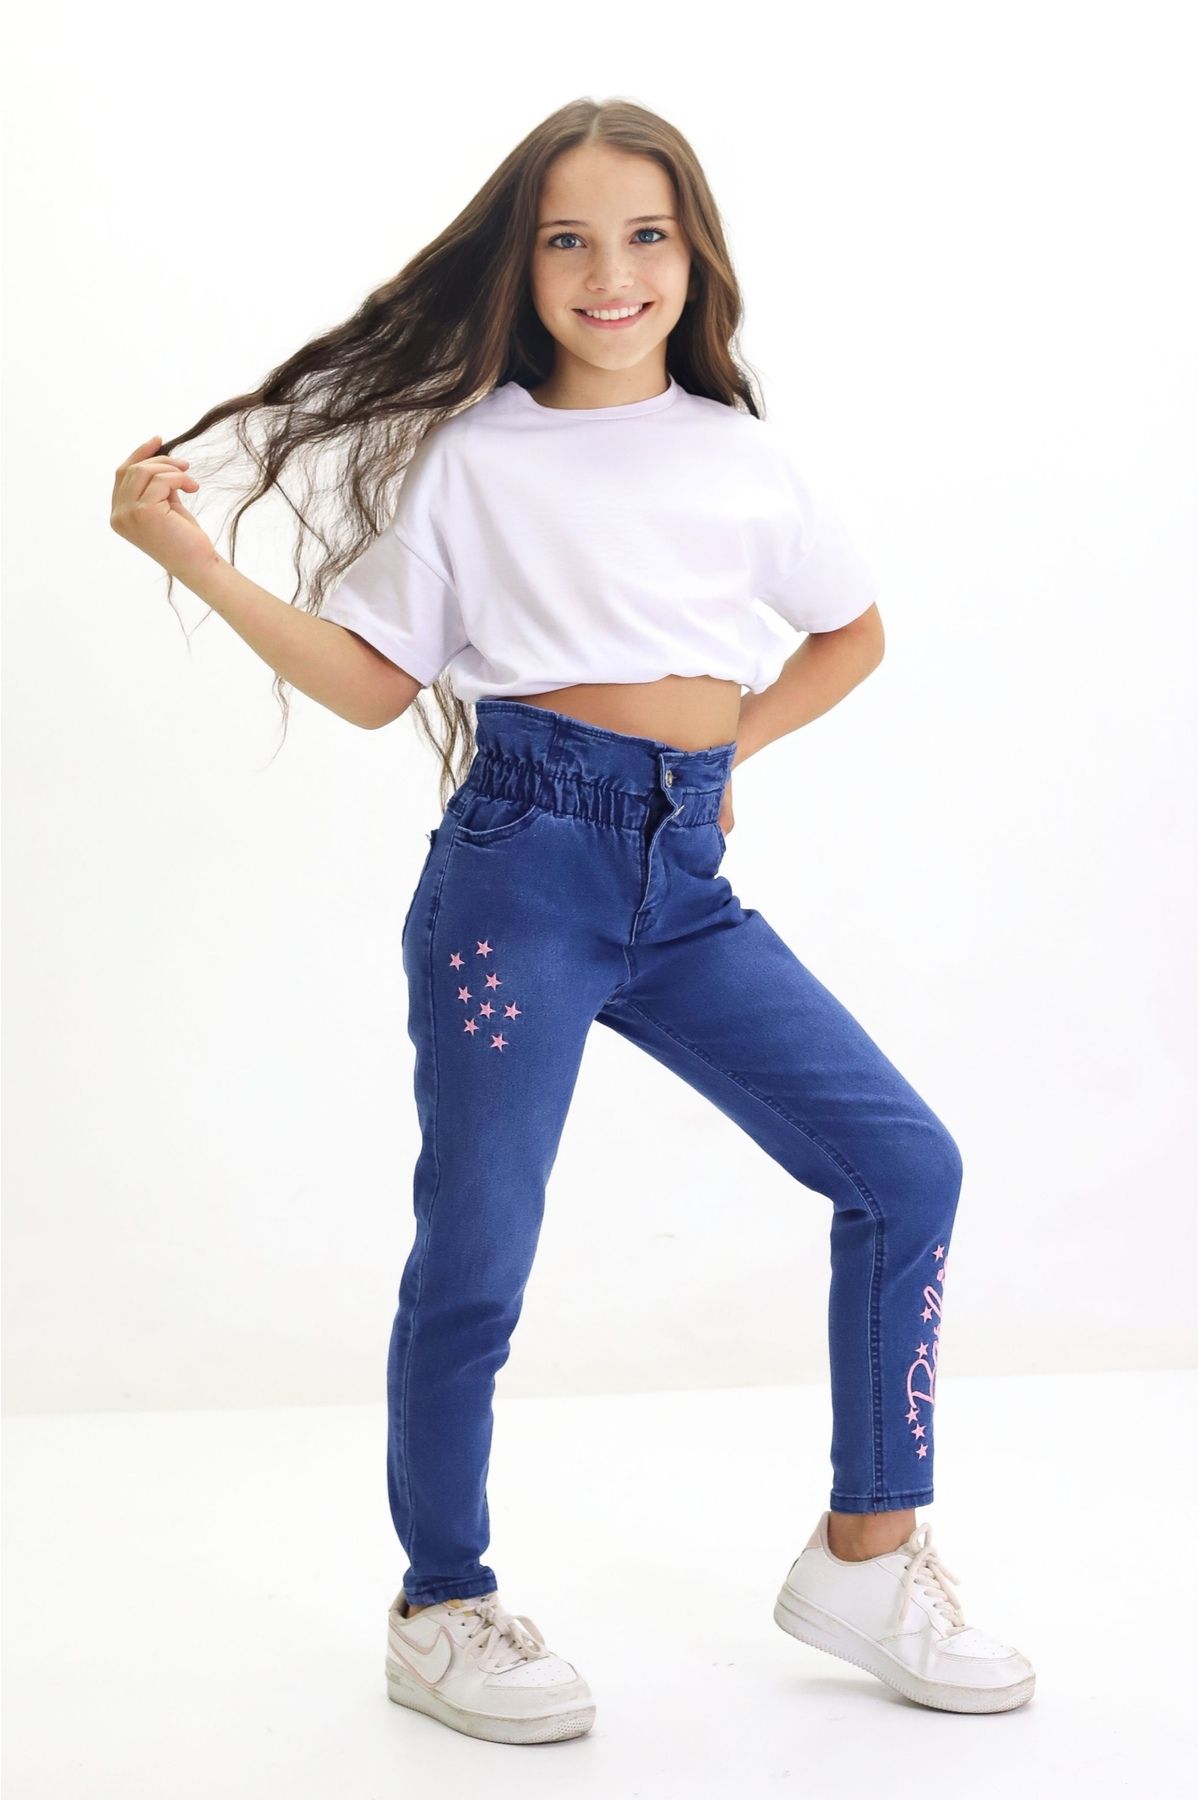 GZT TEKSTİL Kız Çocuk Likralı Pamuklu Kot Jeans Pantolon Nakış İşlemeli